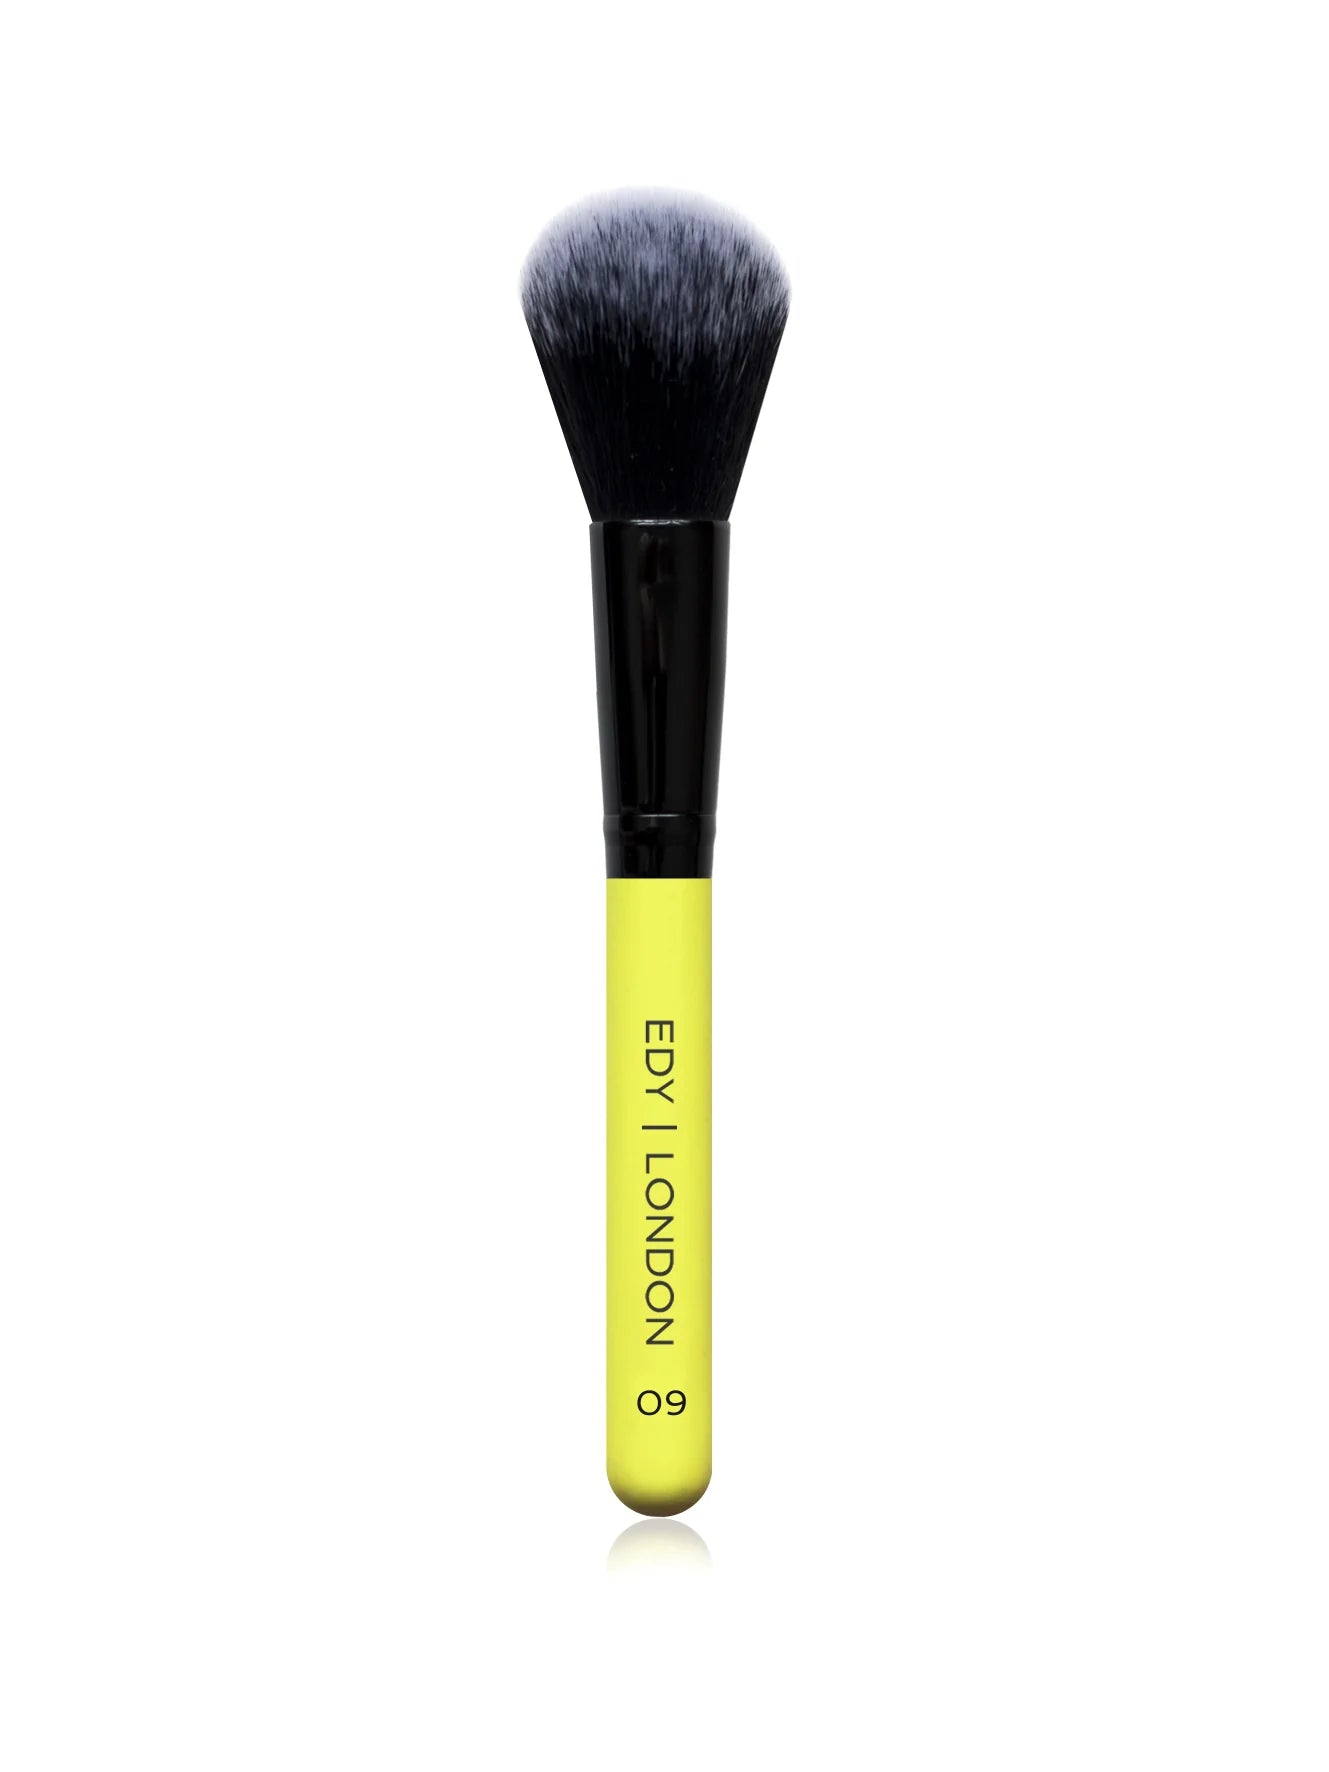 Small Domed Blush Brush 09 Make-up Brush EDY LONDON Lemon   - EDY LONDON PRODUCTS UK - The Best Makeup Brushes - shop.edy.london